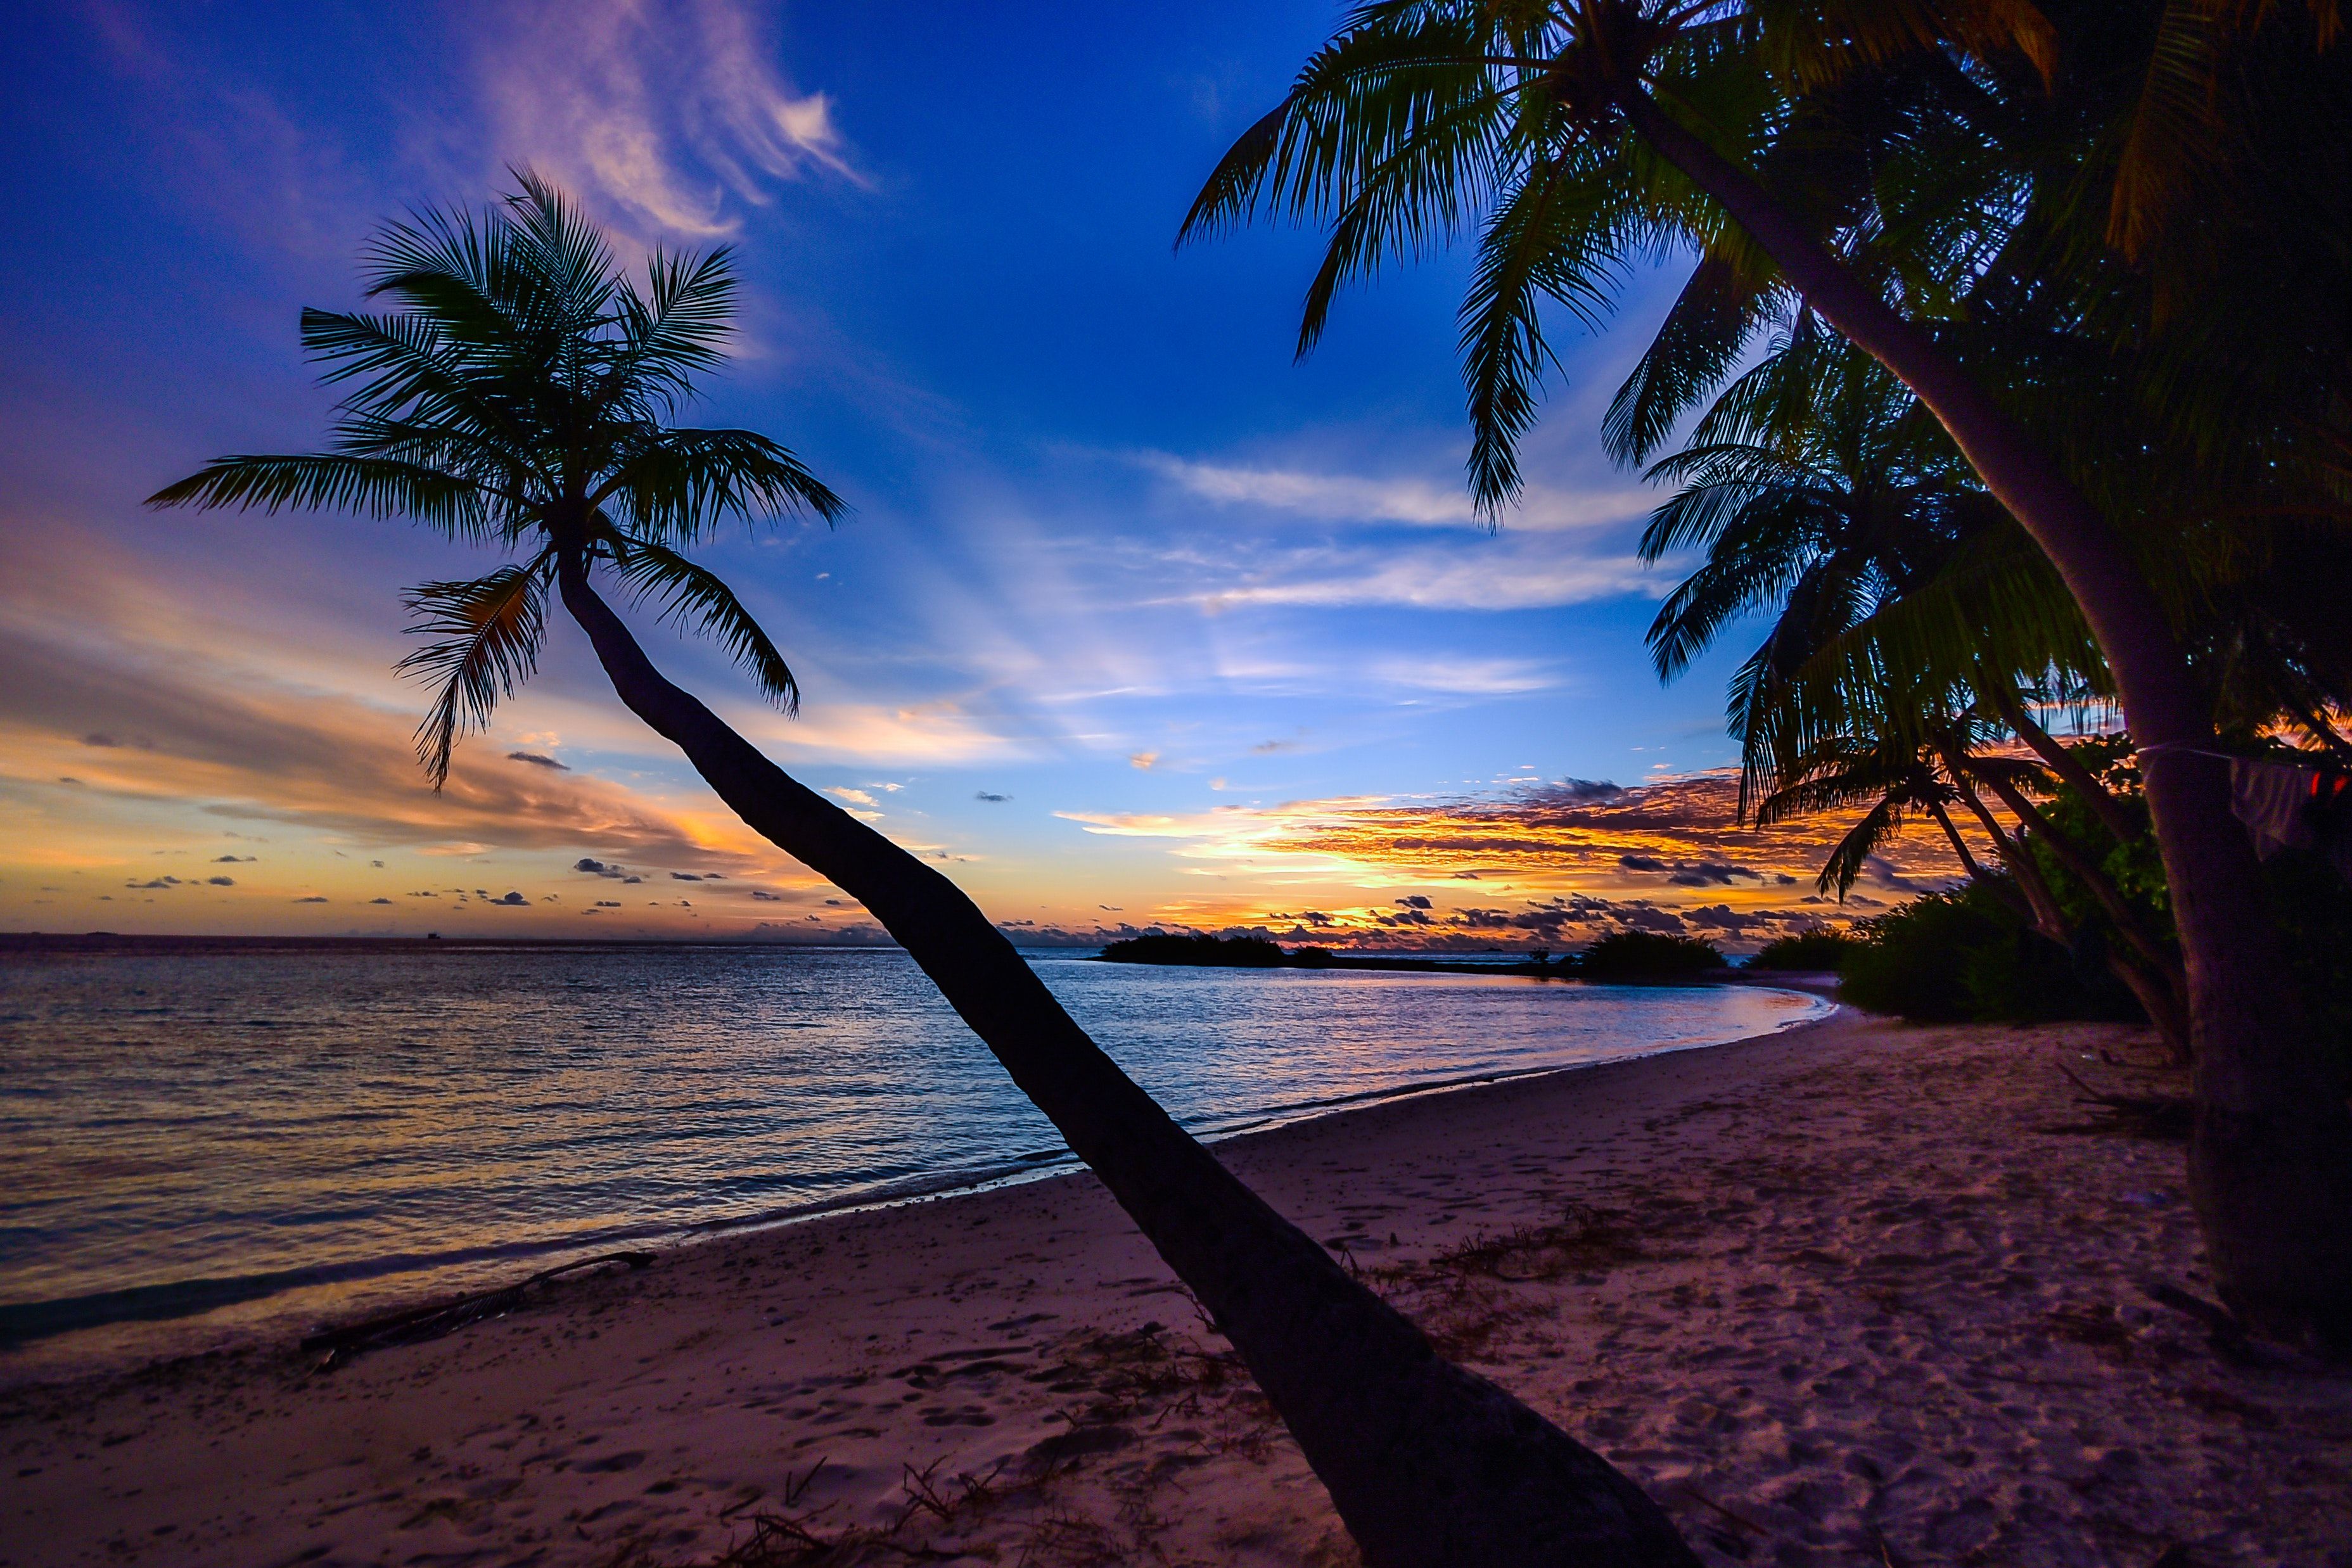 A palm tree on the beach at sunset - Beach